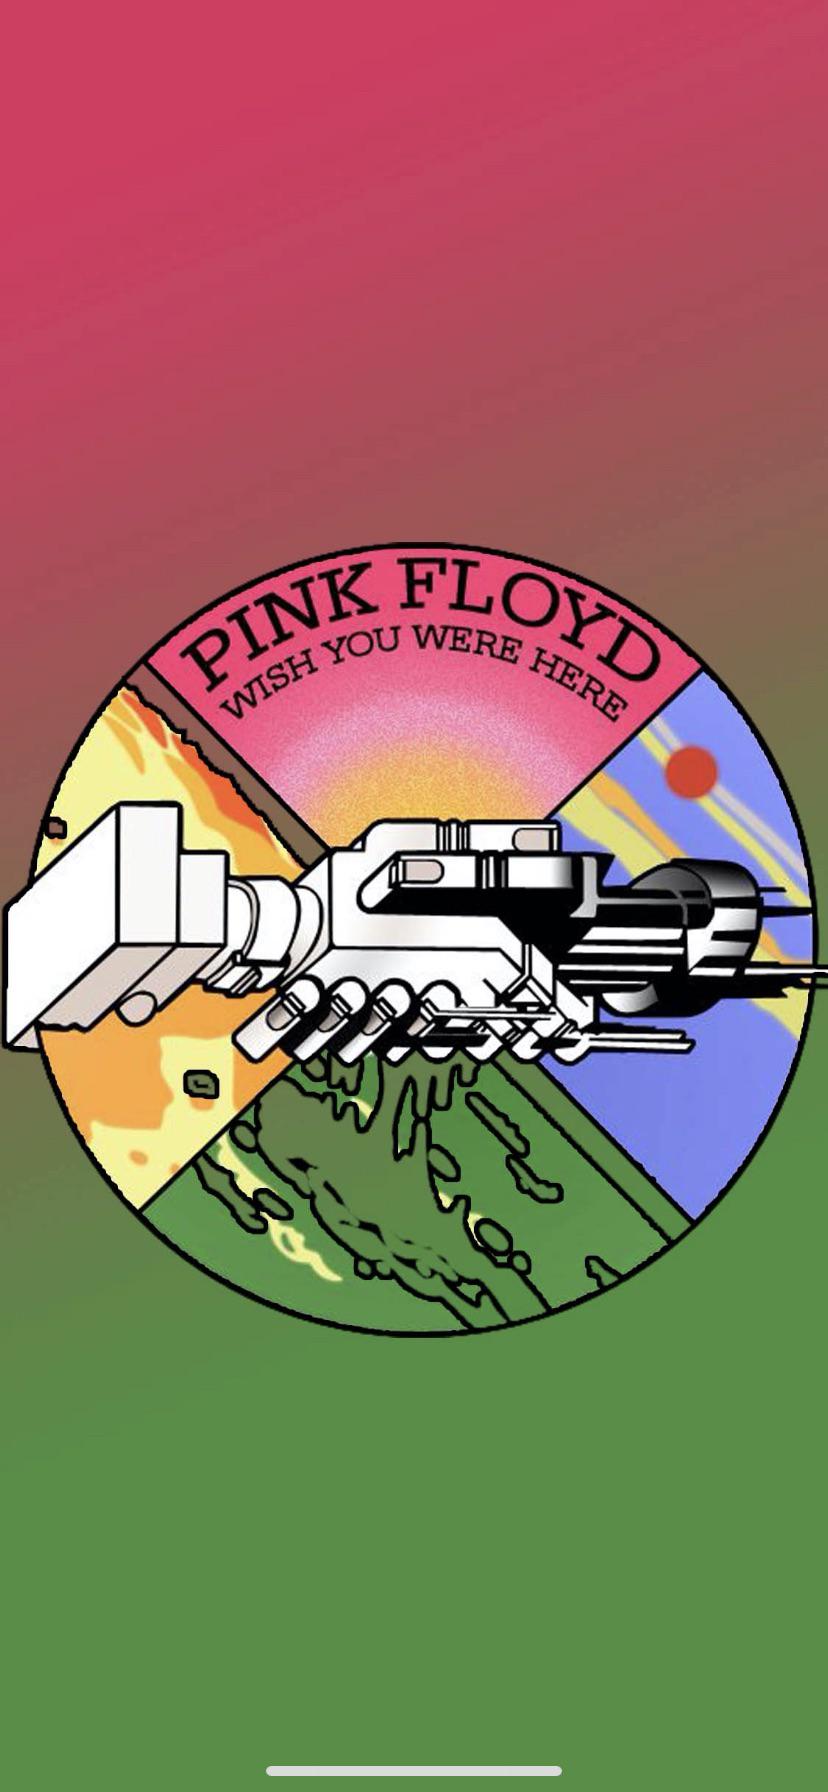 Wish you were here wallpaper: pinkfloyd